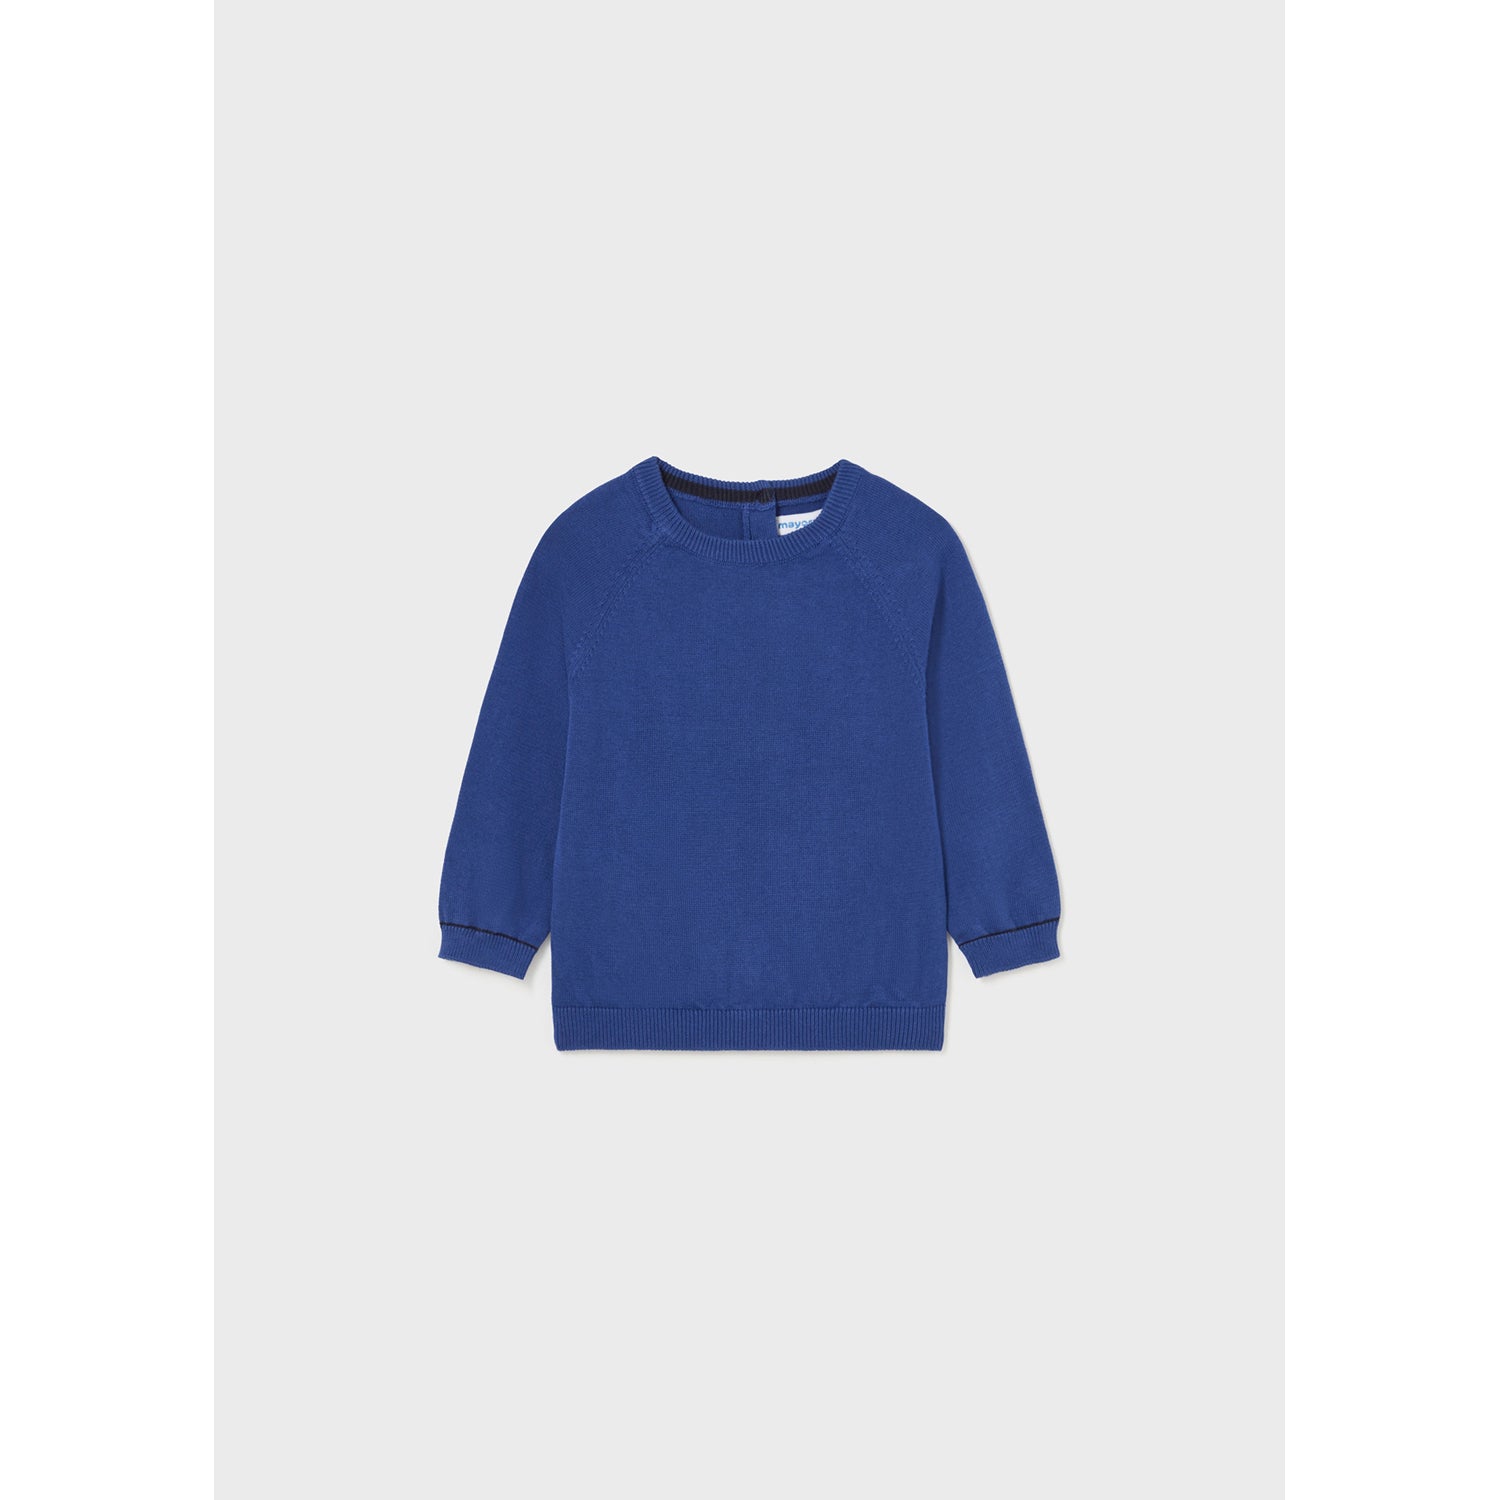 Mayoral Baby Boy Basic Pullover Sweater 309-30 Klein